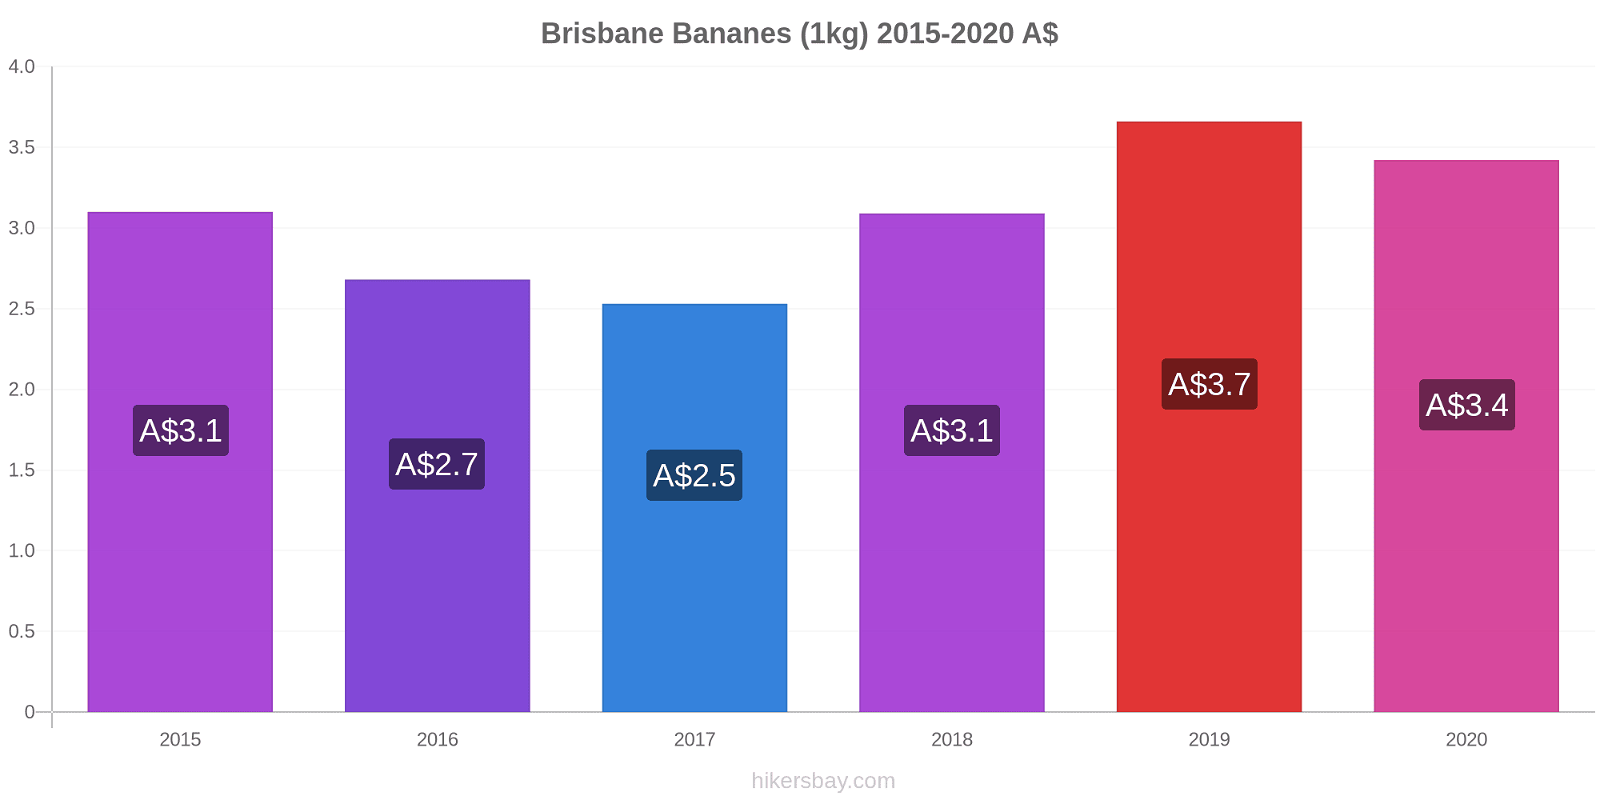 Brisbane changements de prix Bananes (1kg) hikersbay.com